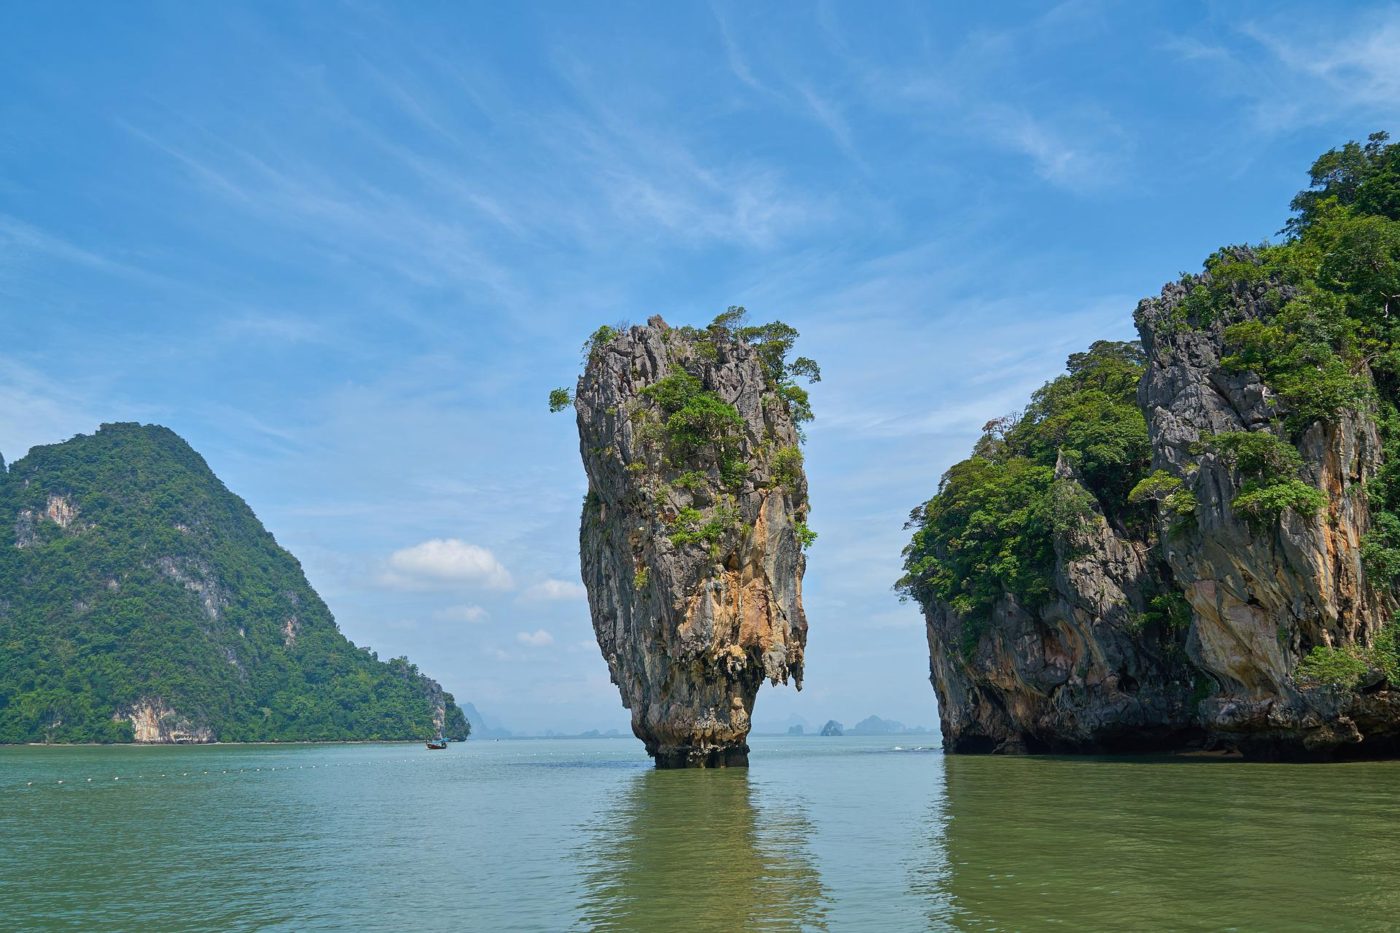 Thailand’s Boat Tour on the Magnificent Phang Nga Bay and “James Bond Island”